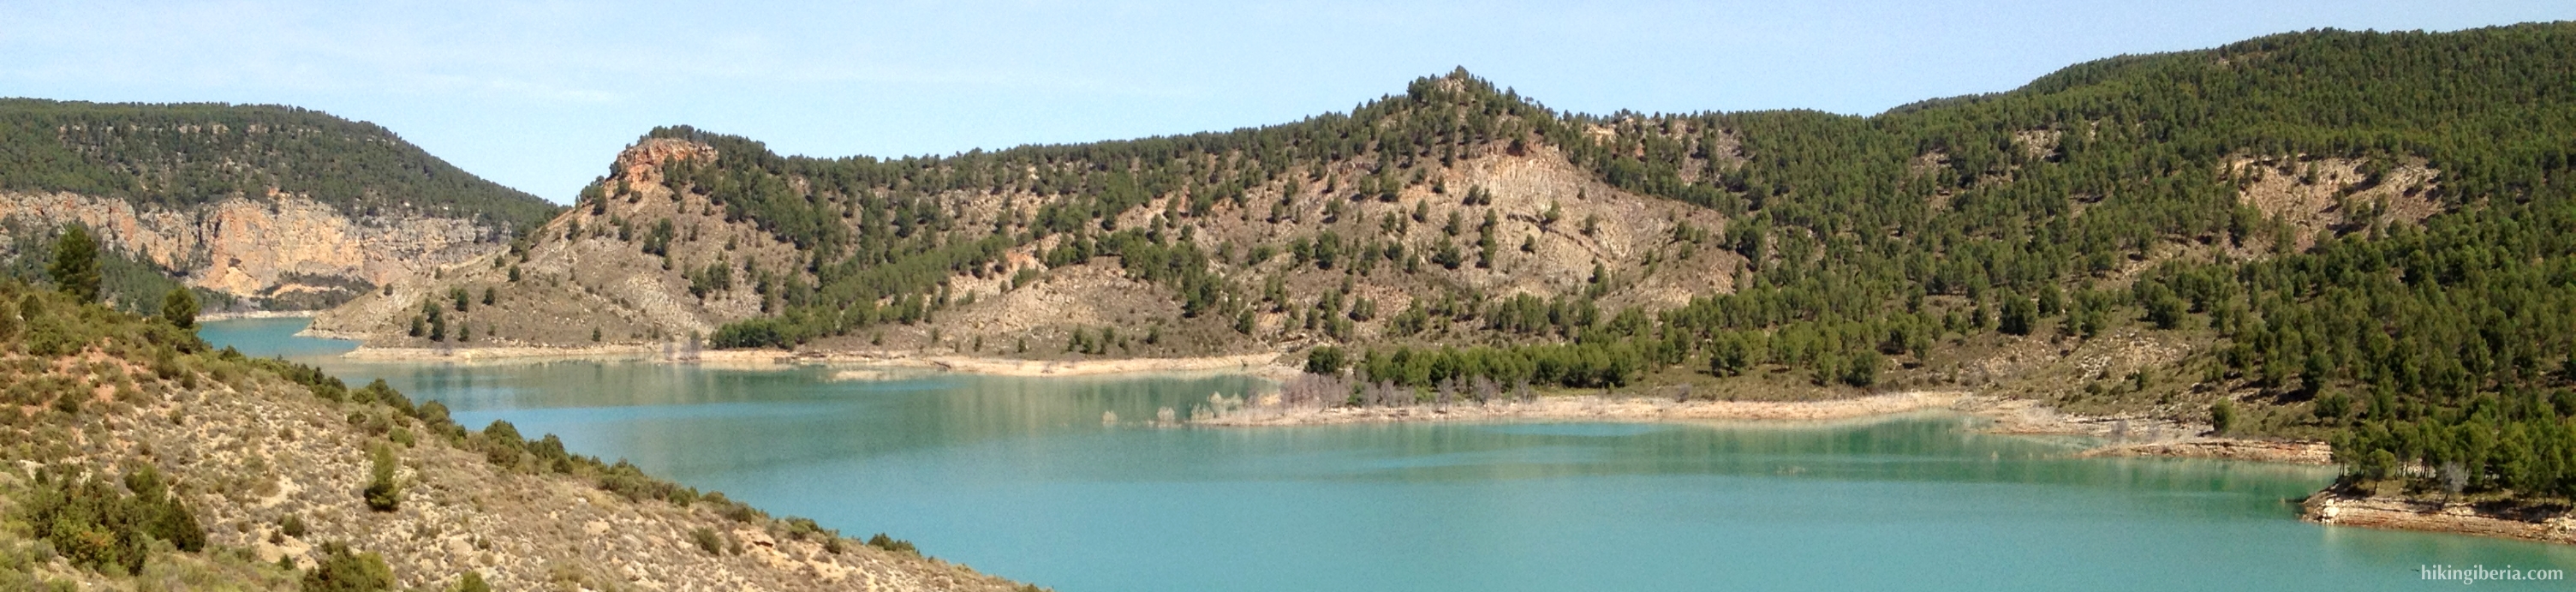 Reservoir of Contreras